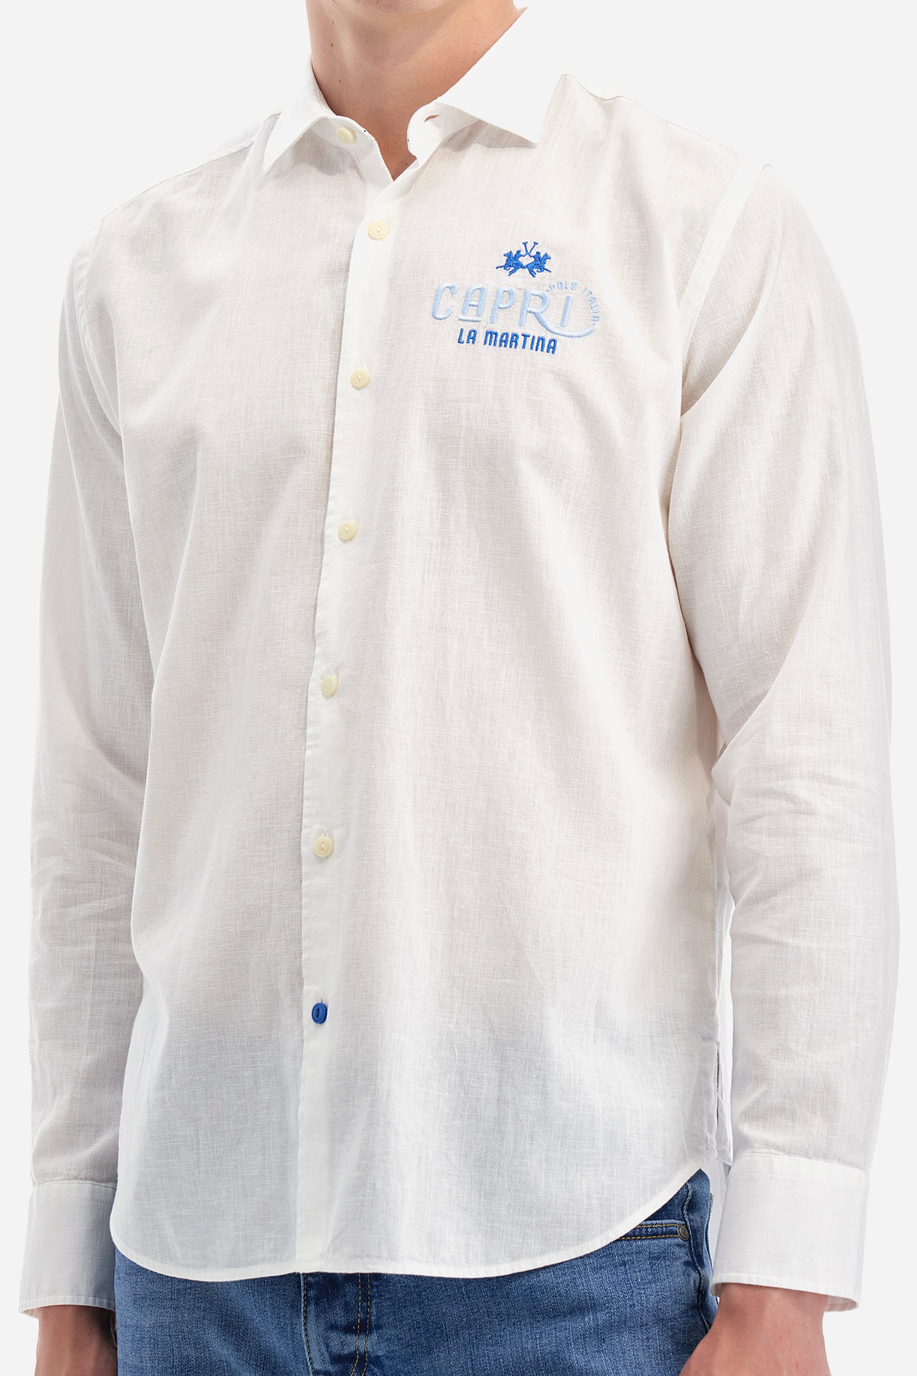 Cotton and linen shirt - Innocent - Shirts | La Martina - Official Online Shop